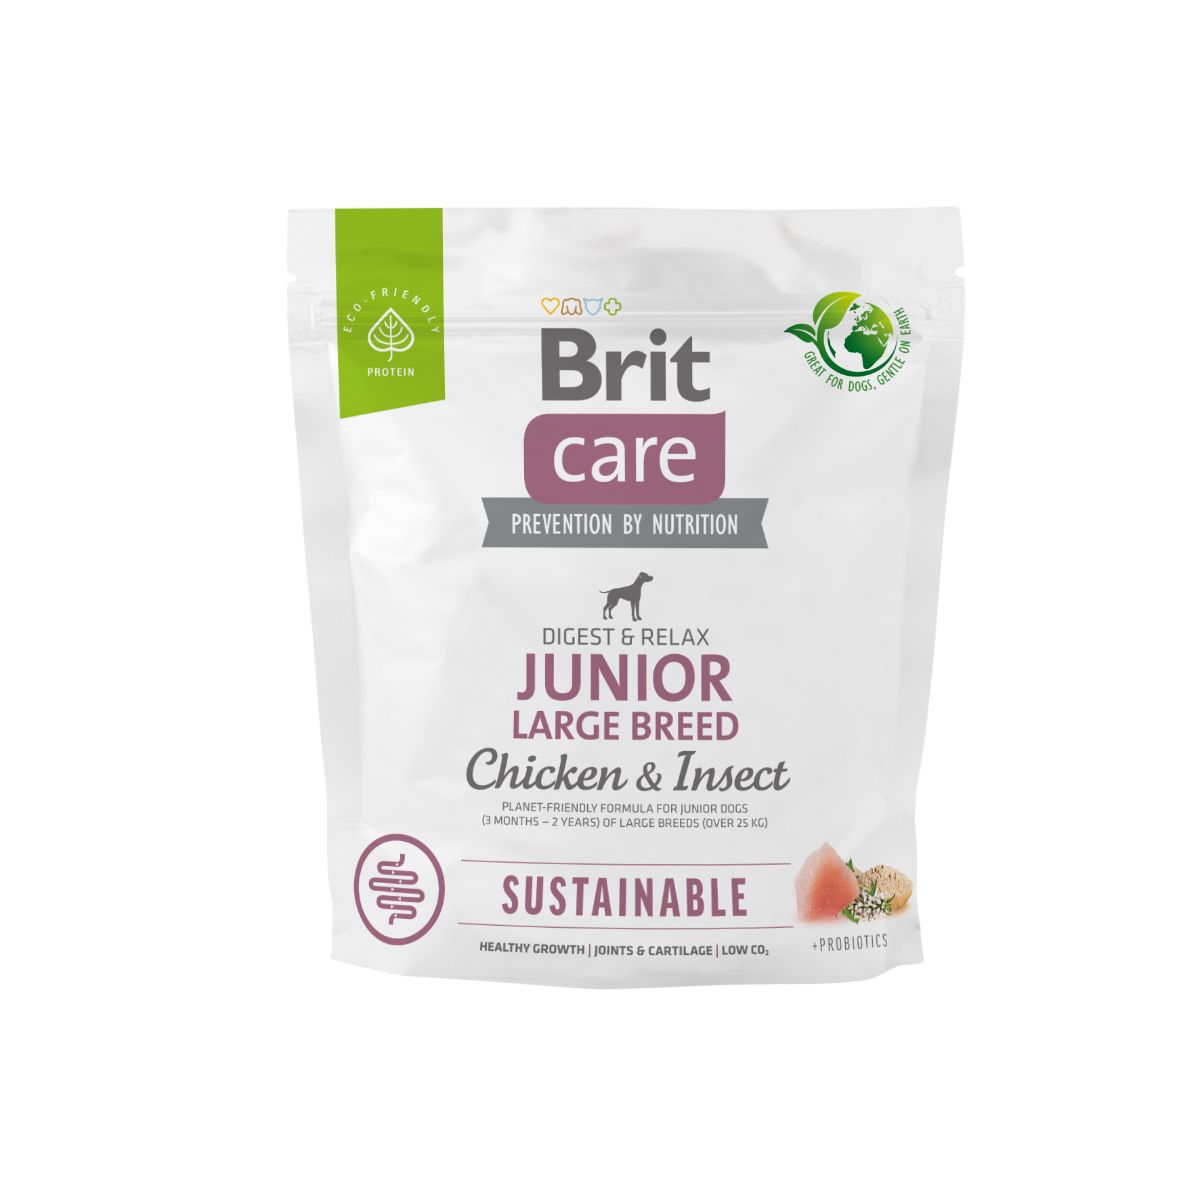 Brit Care – Sustainable – Junior Large Breed-4